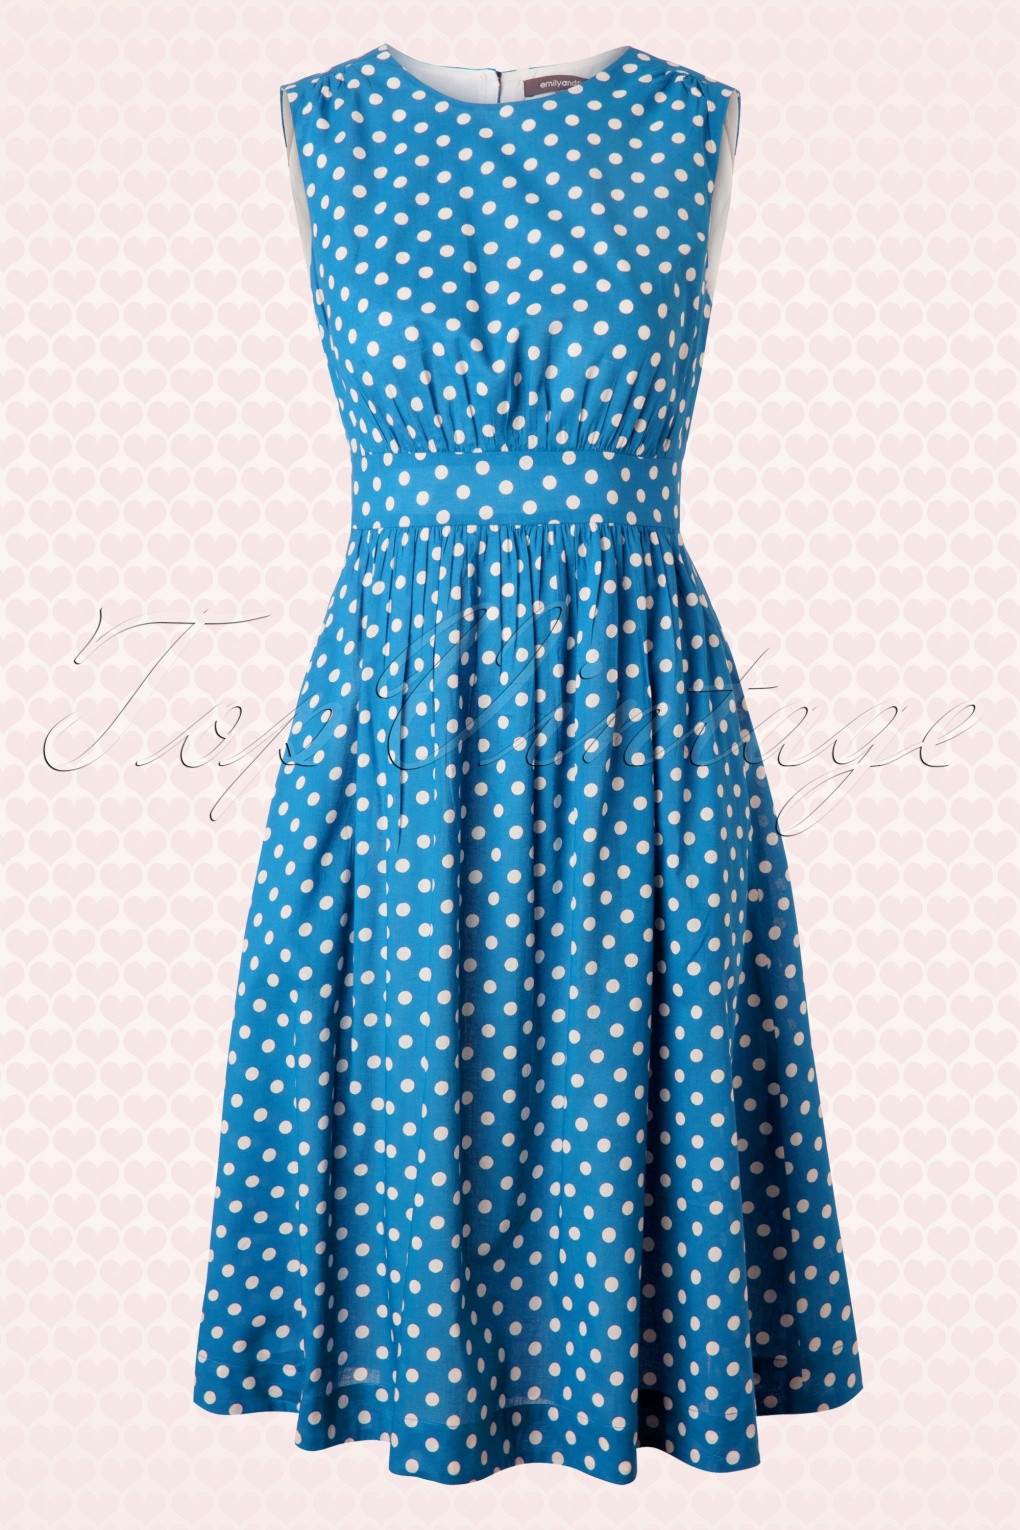 50s Lucy Long Polkadot Dress in Blue